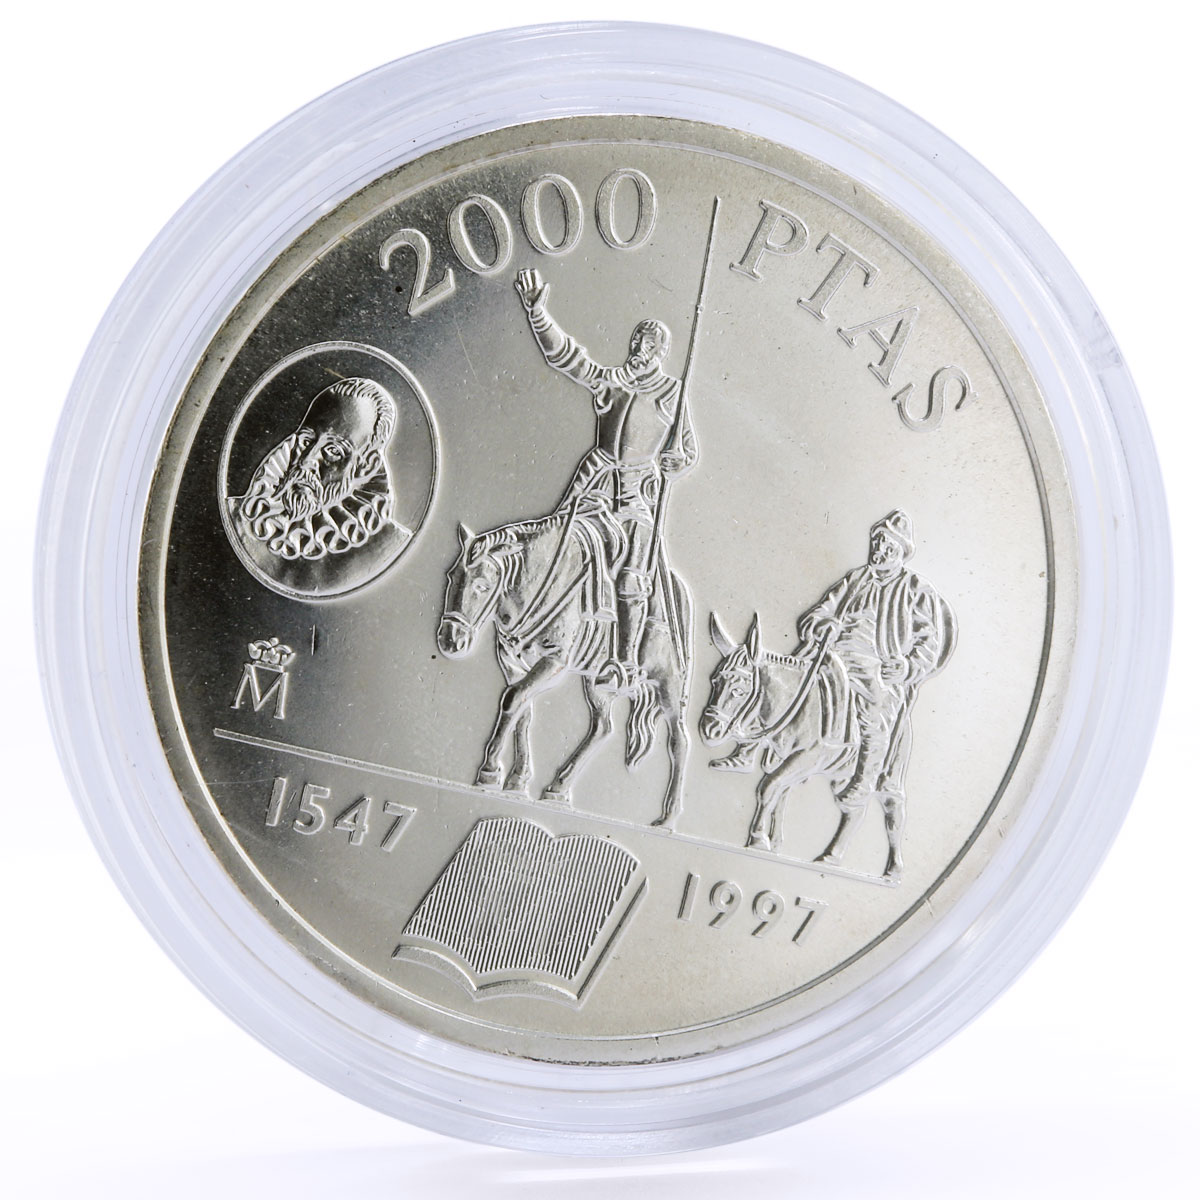 Spain 2000 pesetas Miguel Cervantes Don Quixote Literature silver coin 1997